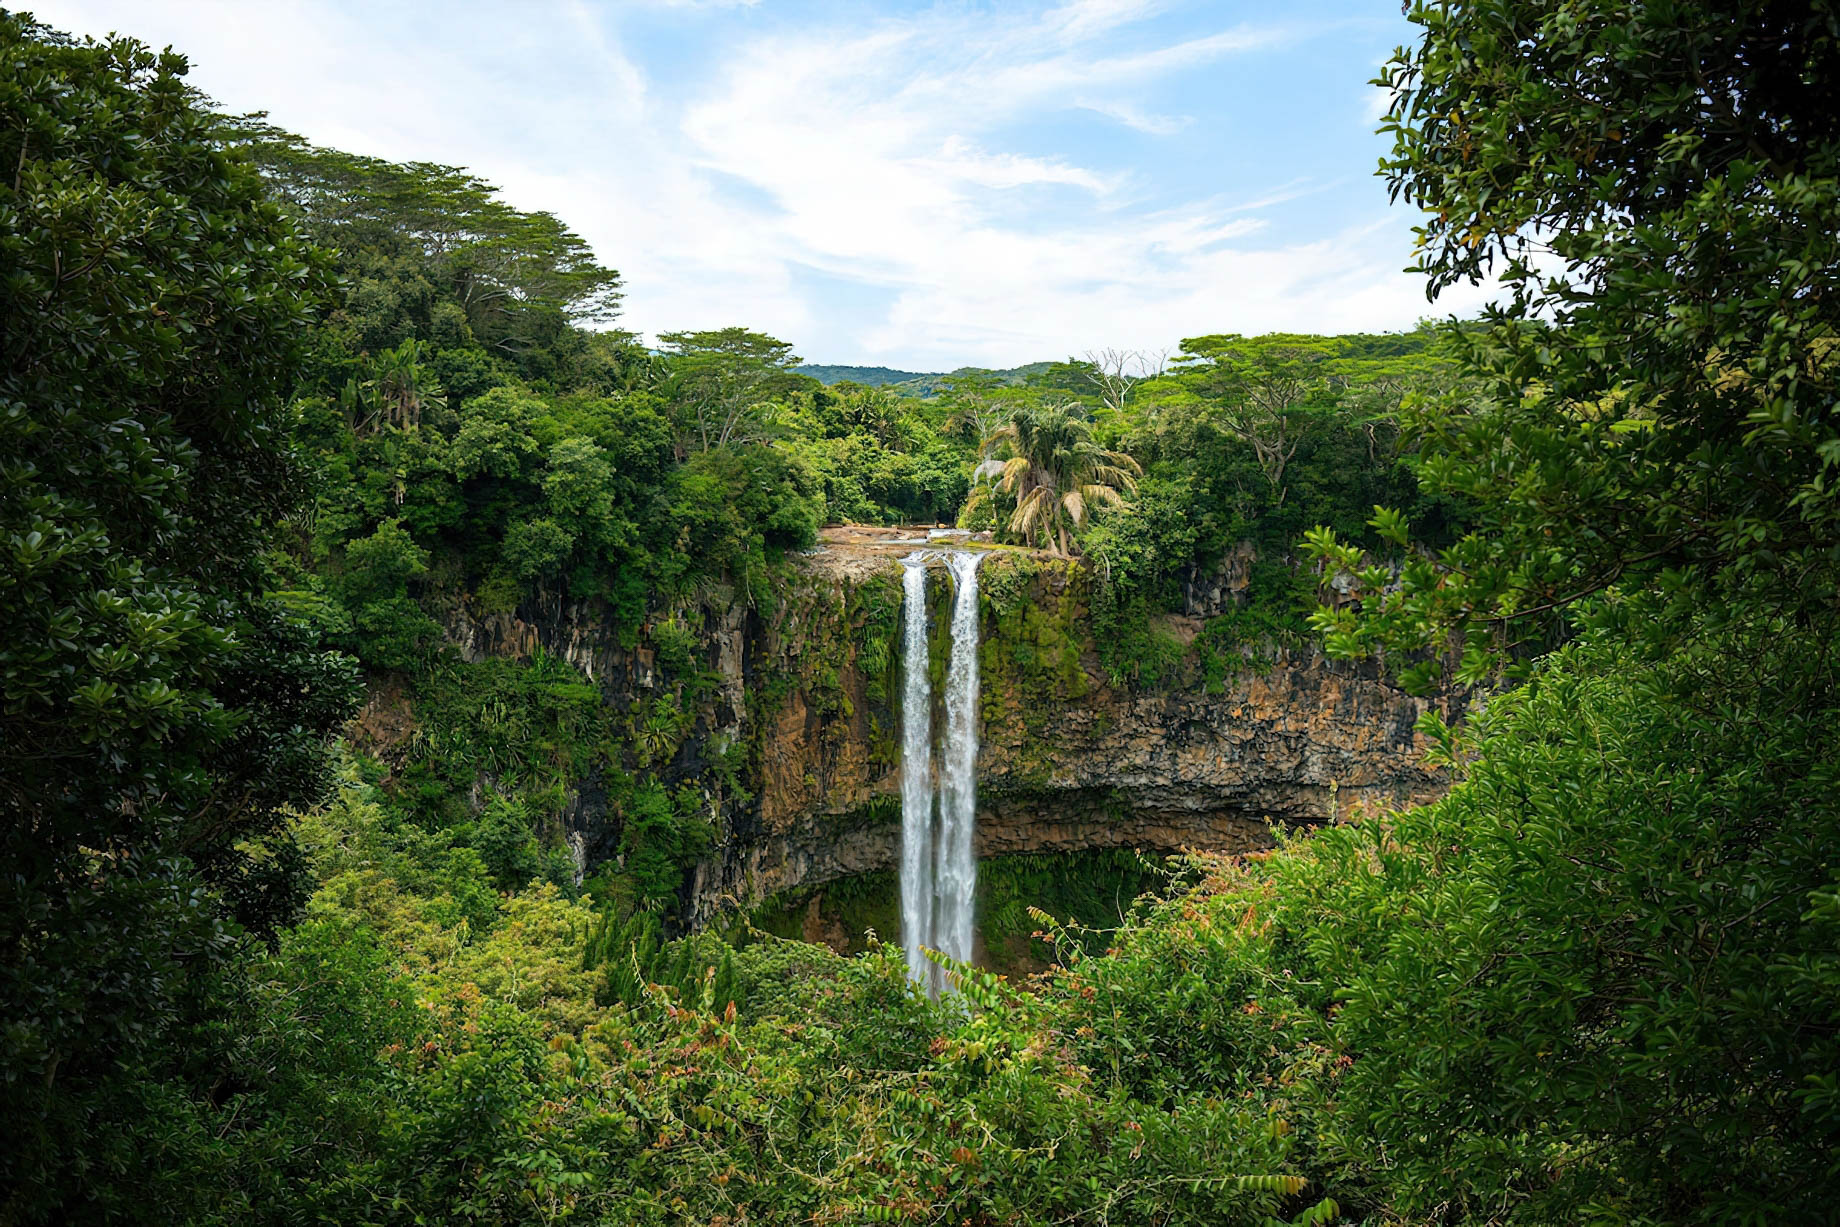 Anantara Iko Mauritius Resort & Villas – Plaine Magnien, Mauritius – Chamarel Waterfall